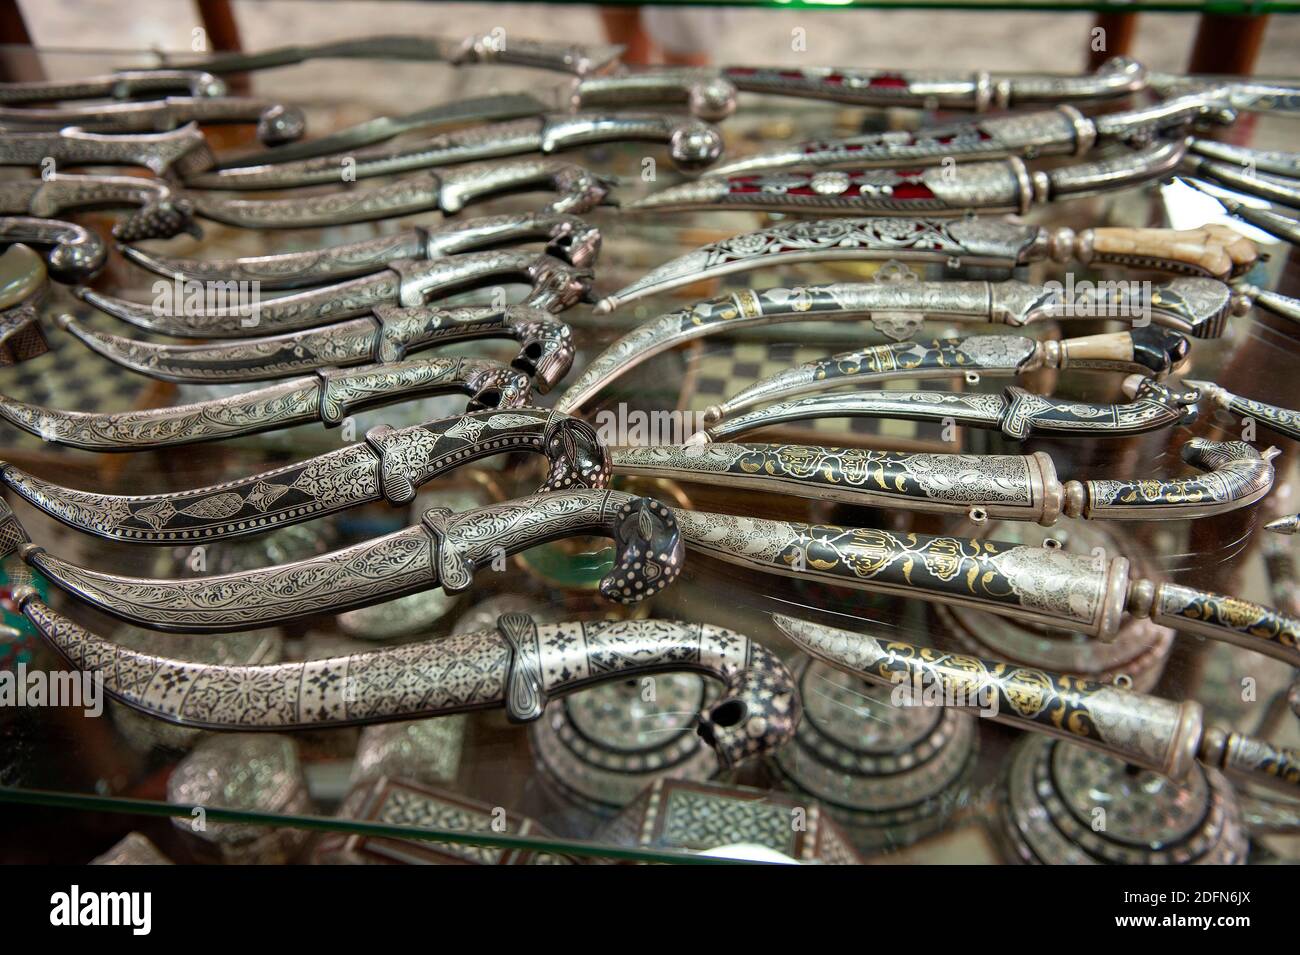 Souvenirs, daggers with decorative sheath made of silver, Jordan Stock Photo